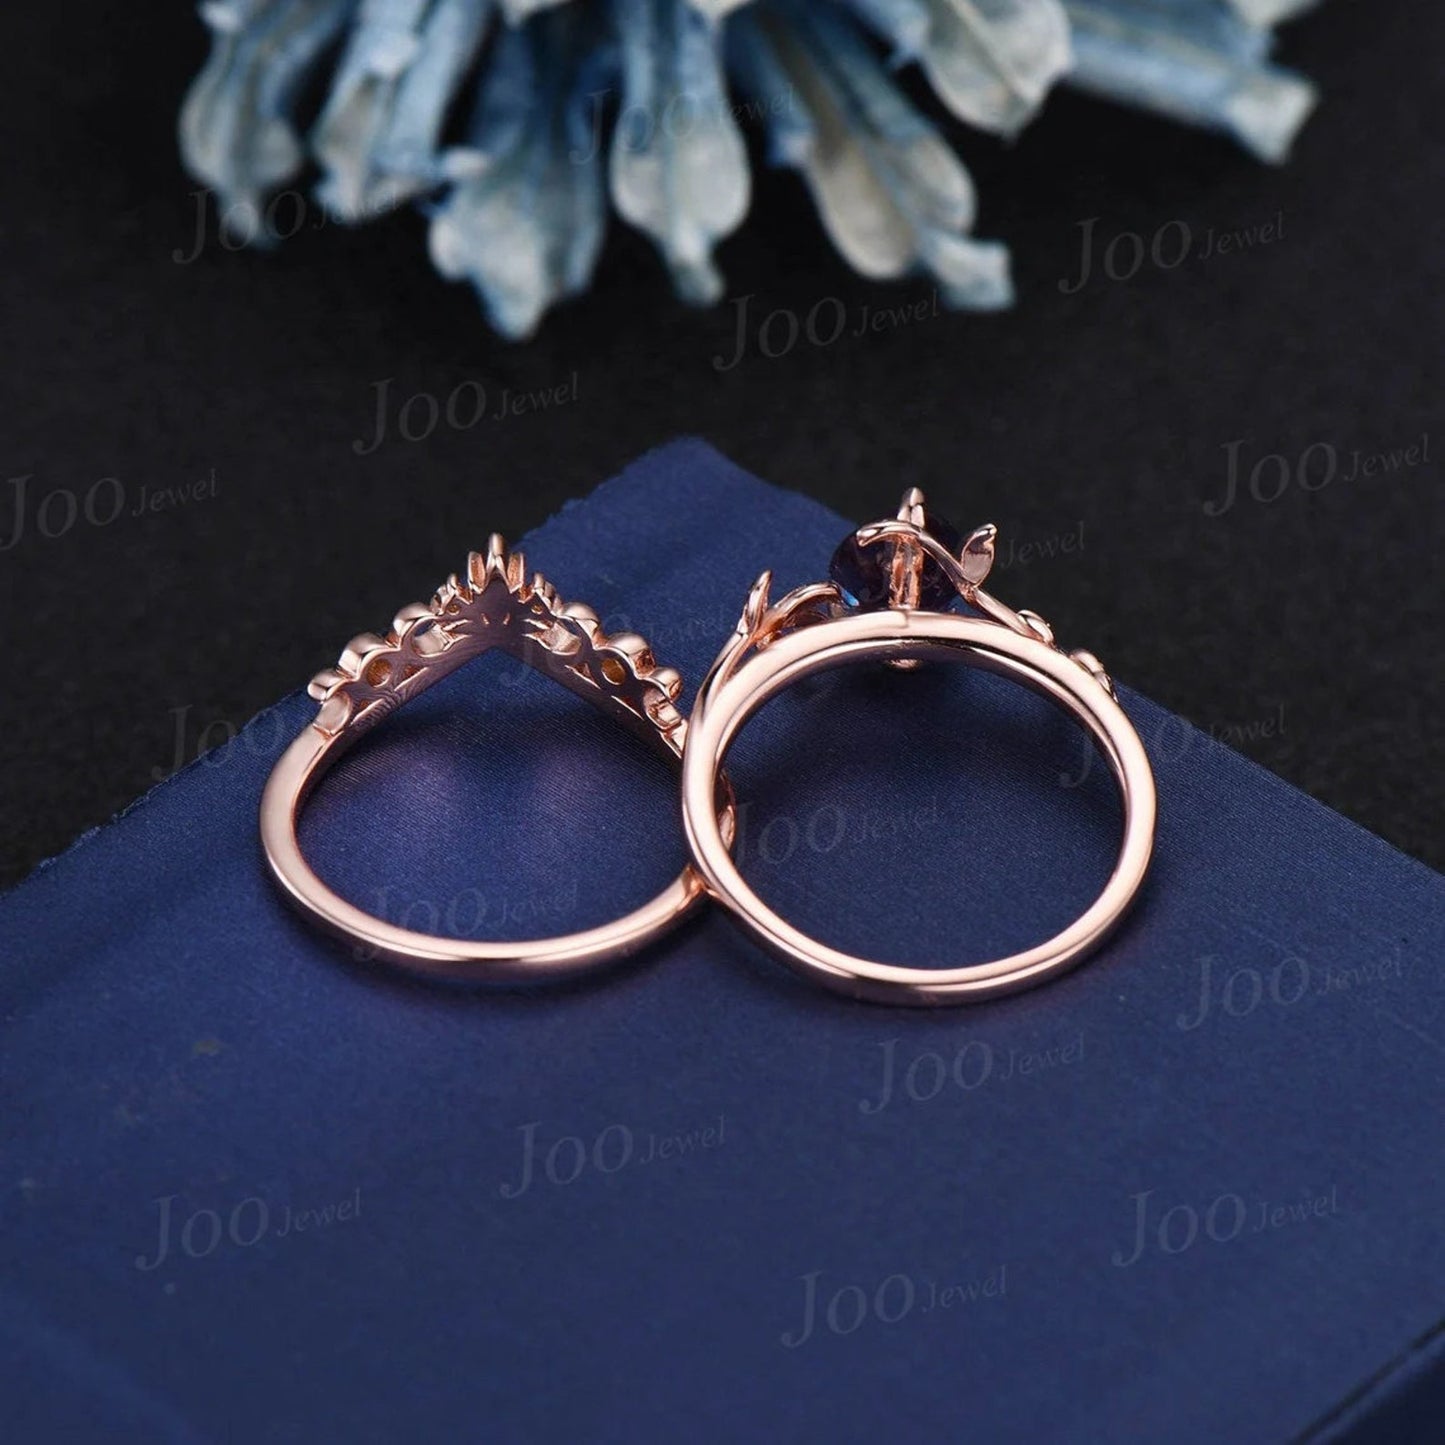 Pear Cut Natural Pink Morganite Diamond Leaf Engagement Ring Set 14K Rose Gold Branch Nature Inspired Real Diamond Morganite Wedding Ring